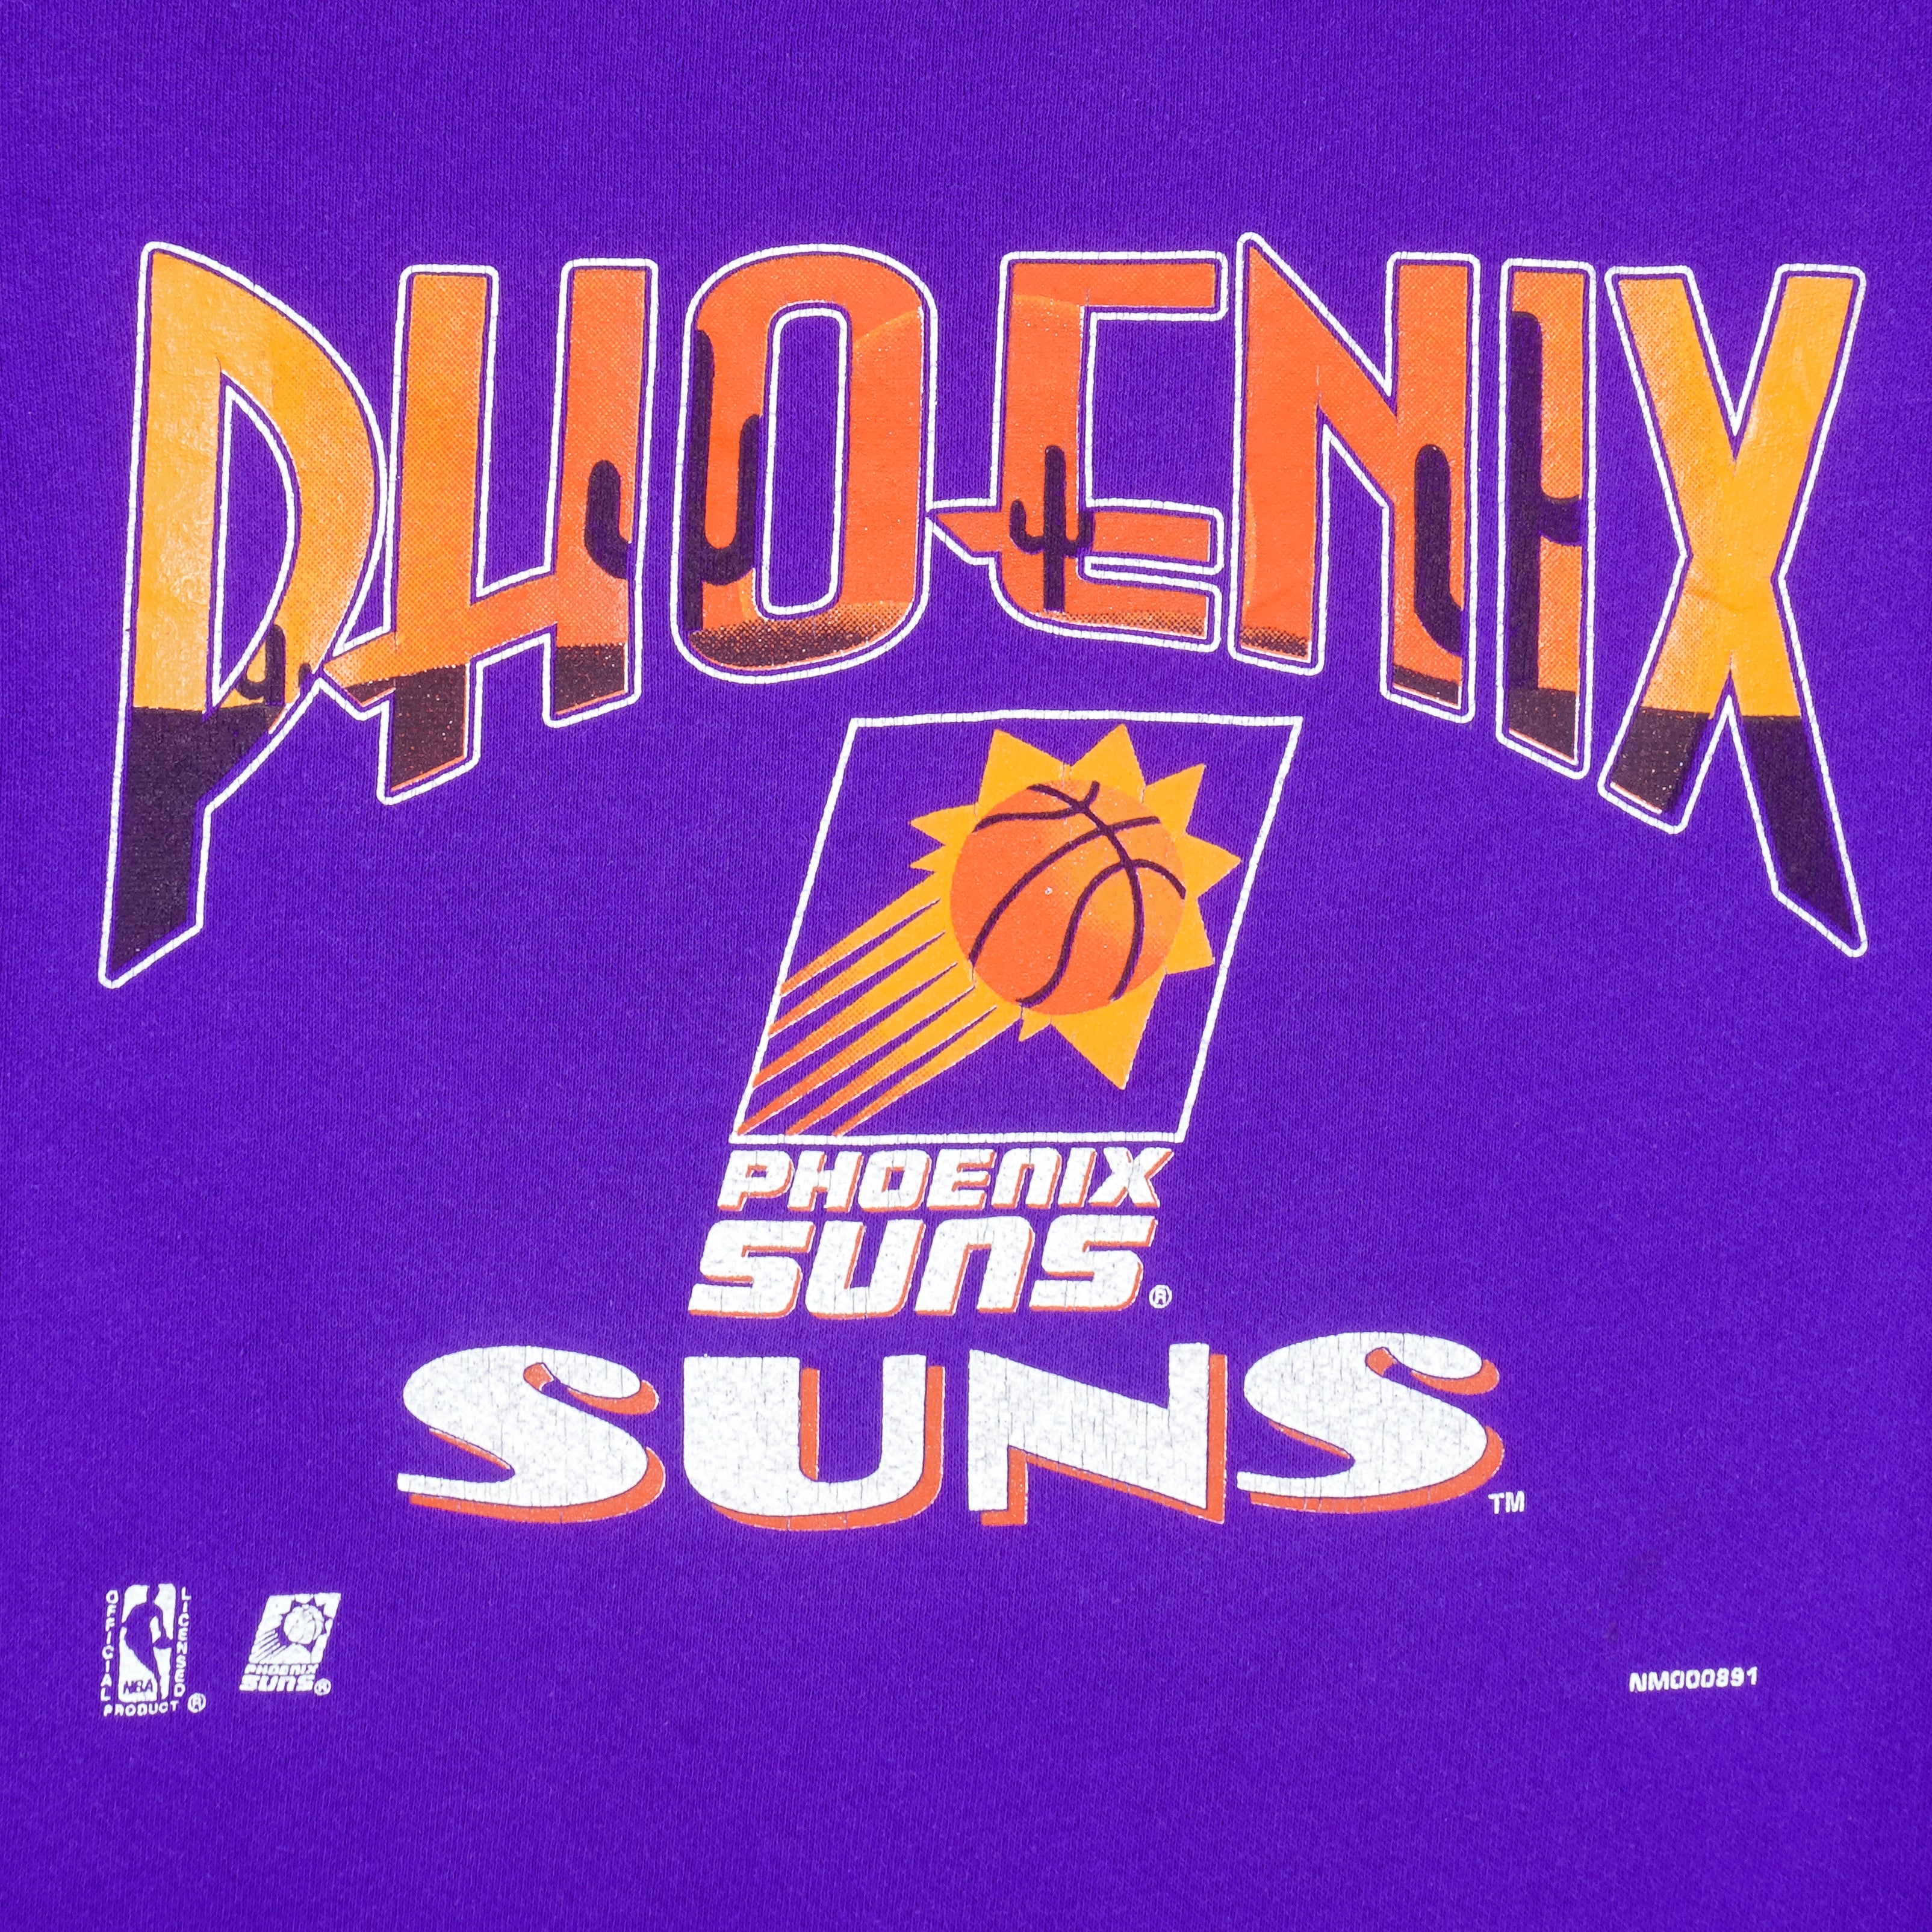 Vintage Phoenix Suns Crewneck Sweater Logo Athletic Size 